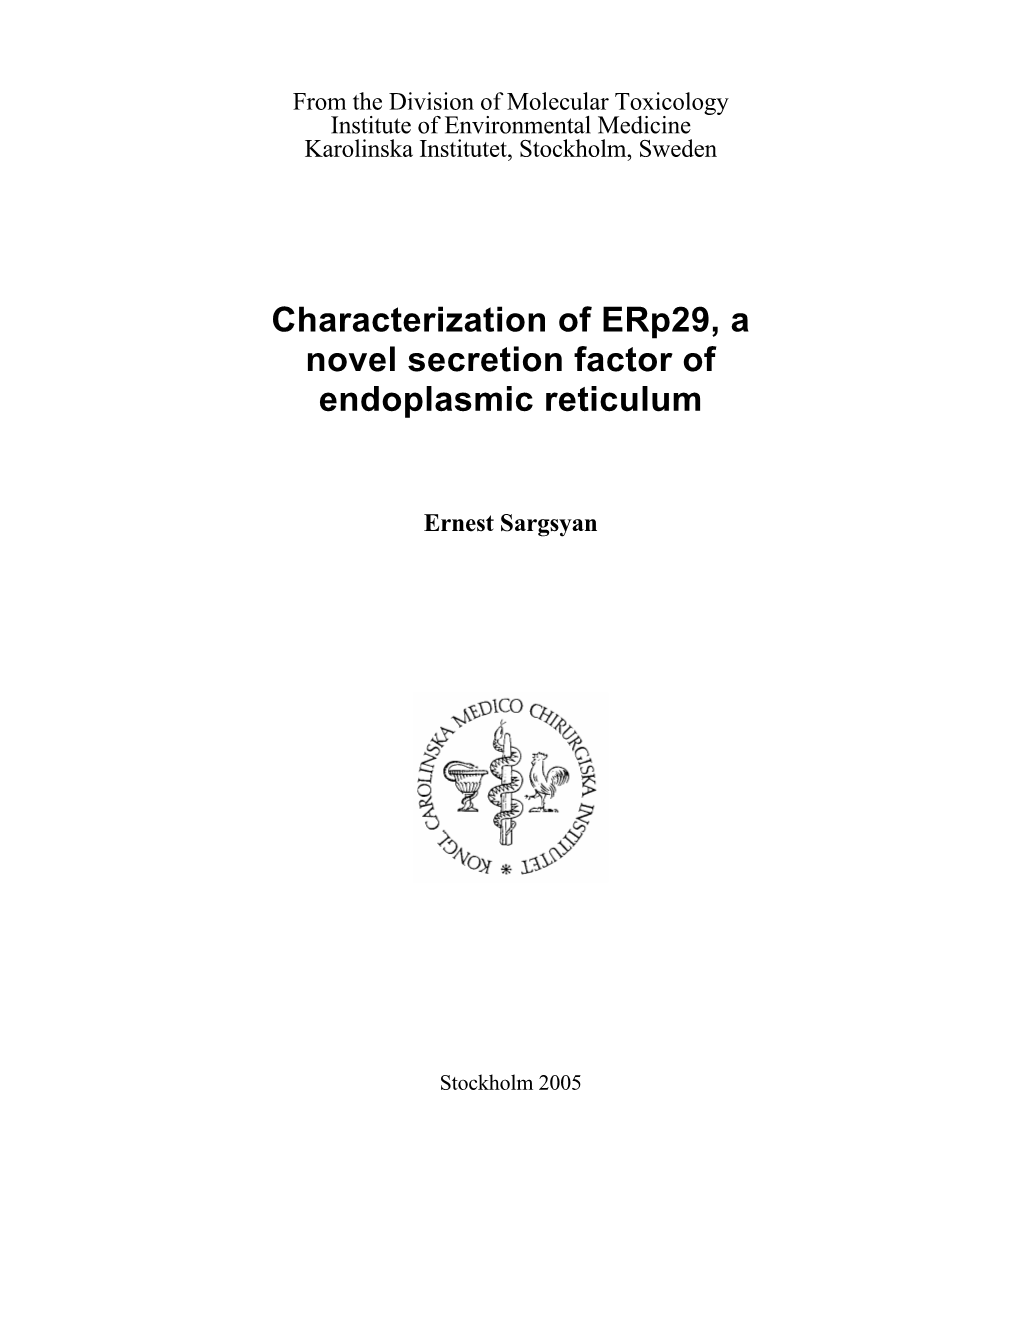 Characterization of Erp29, a Novel Secretion Factor of Endoplasmic Reticulum